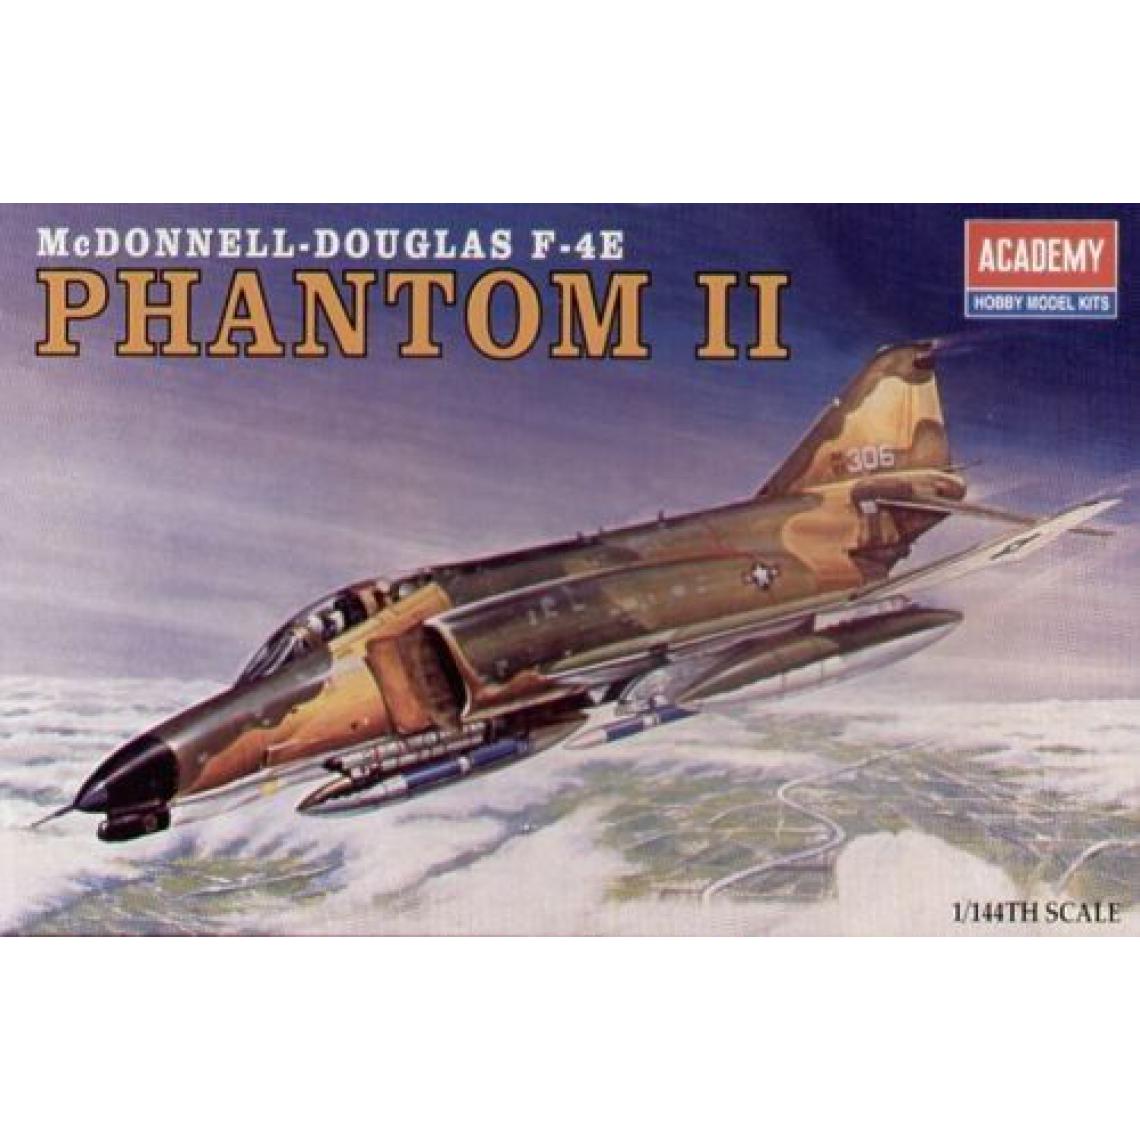 Academy - McDonnell F-4E Phantom II (WAS AC4419) - Accessoires maquettes